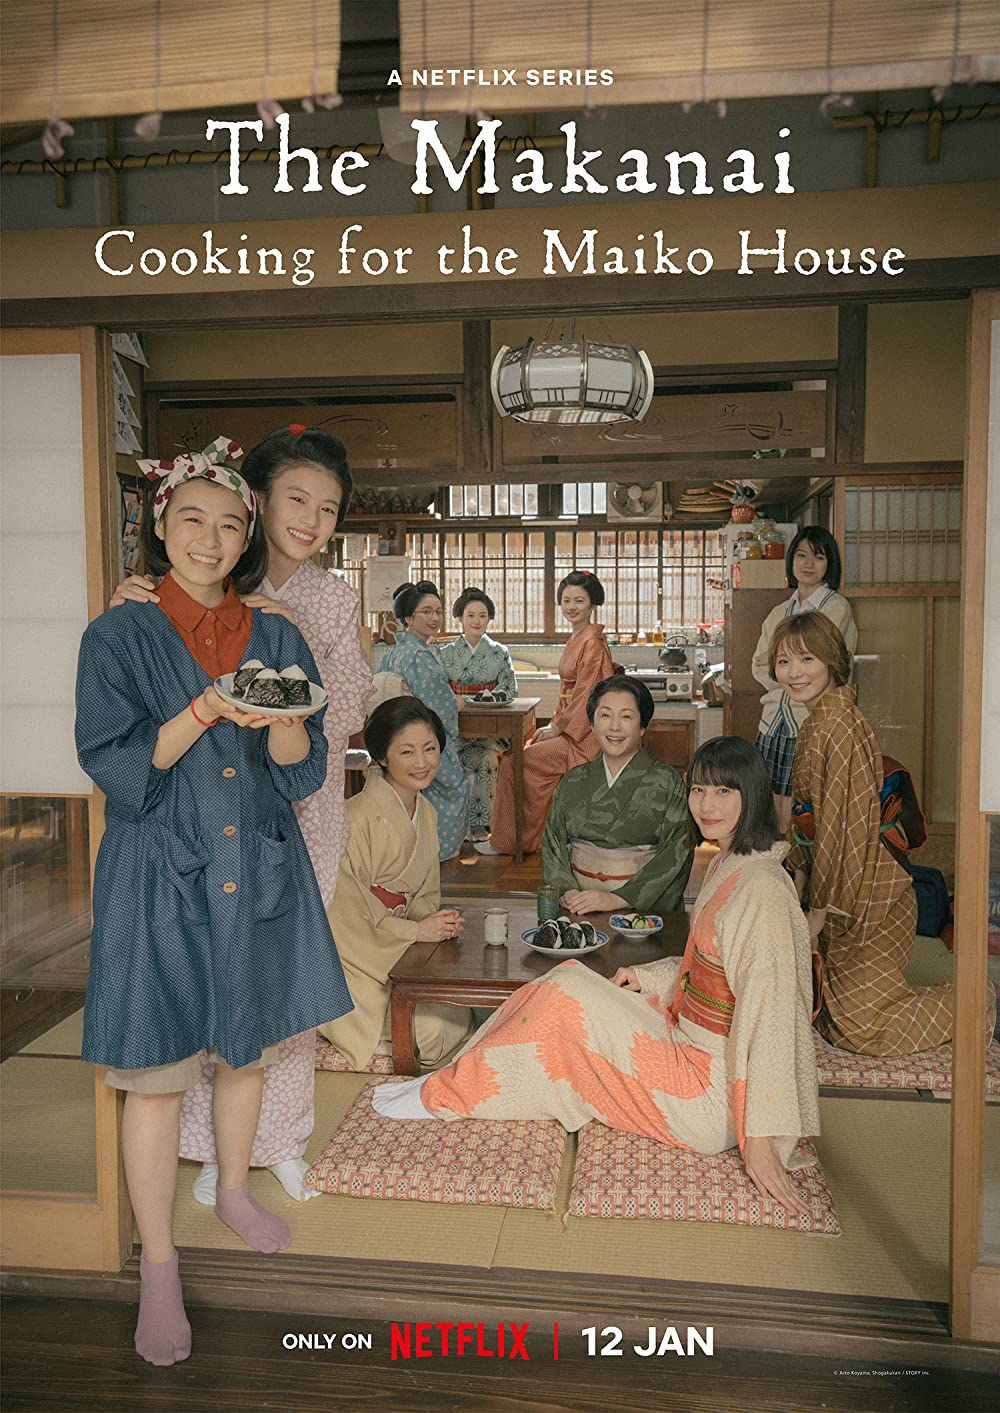 مسلسل The Makanai: Cooking for the Maiko House الموسم 1 الحلقة 9 والأخيرة مترجمة